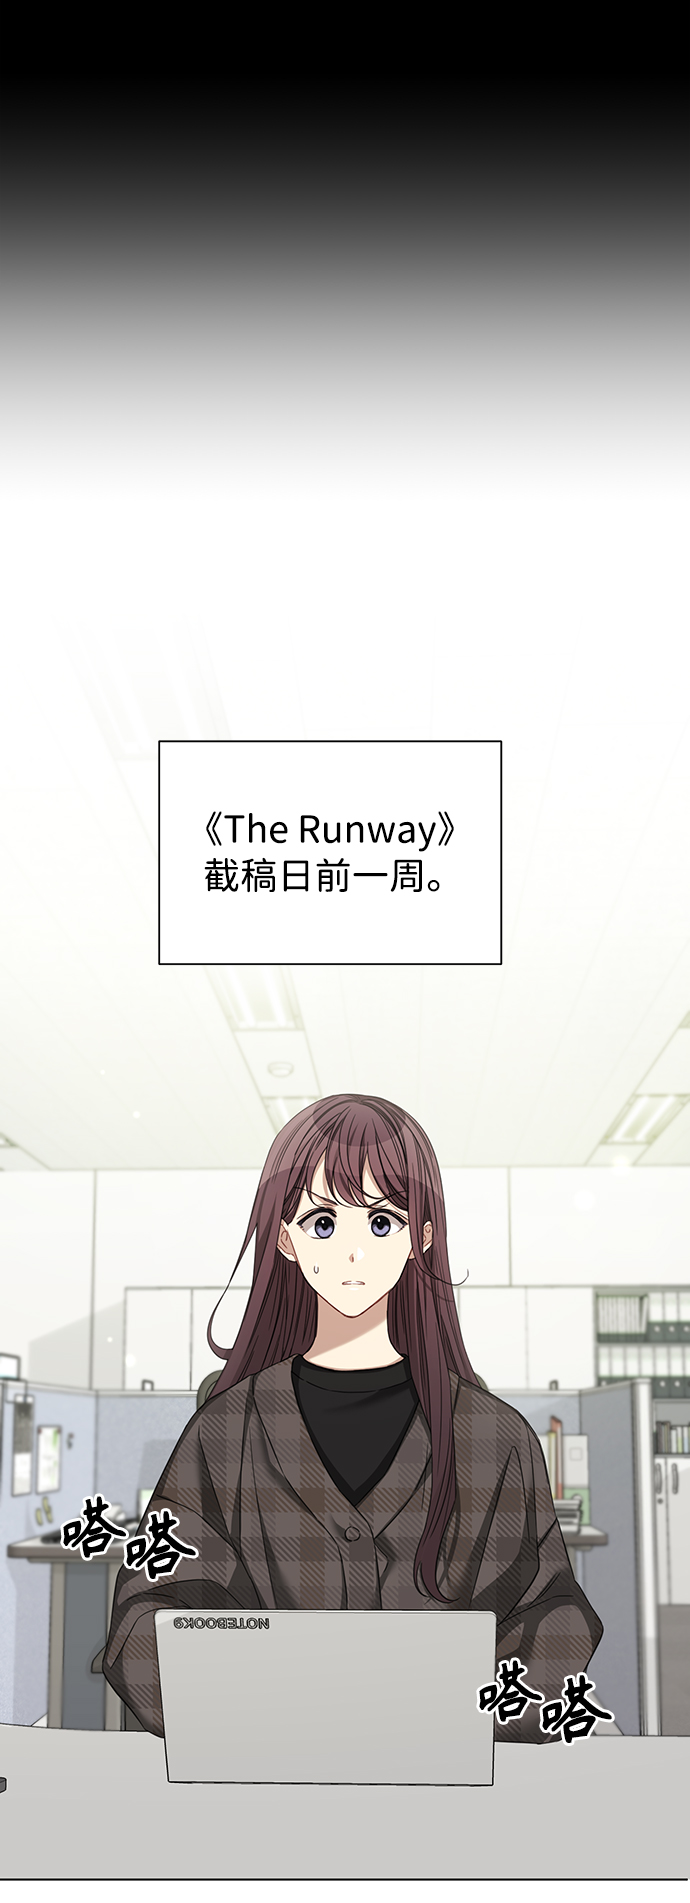 The Runway - 第26話(1/2) - 4